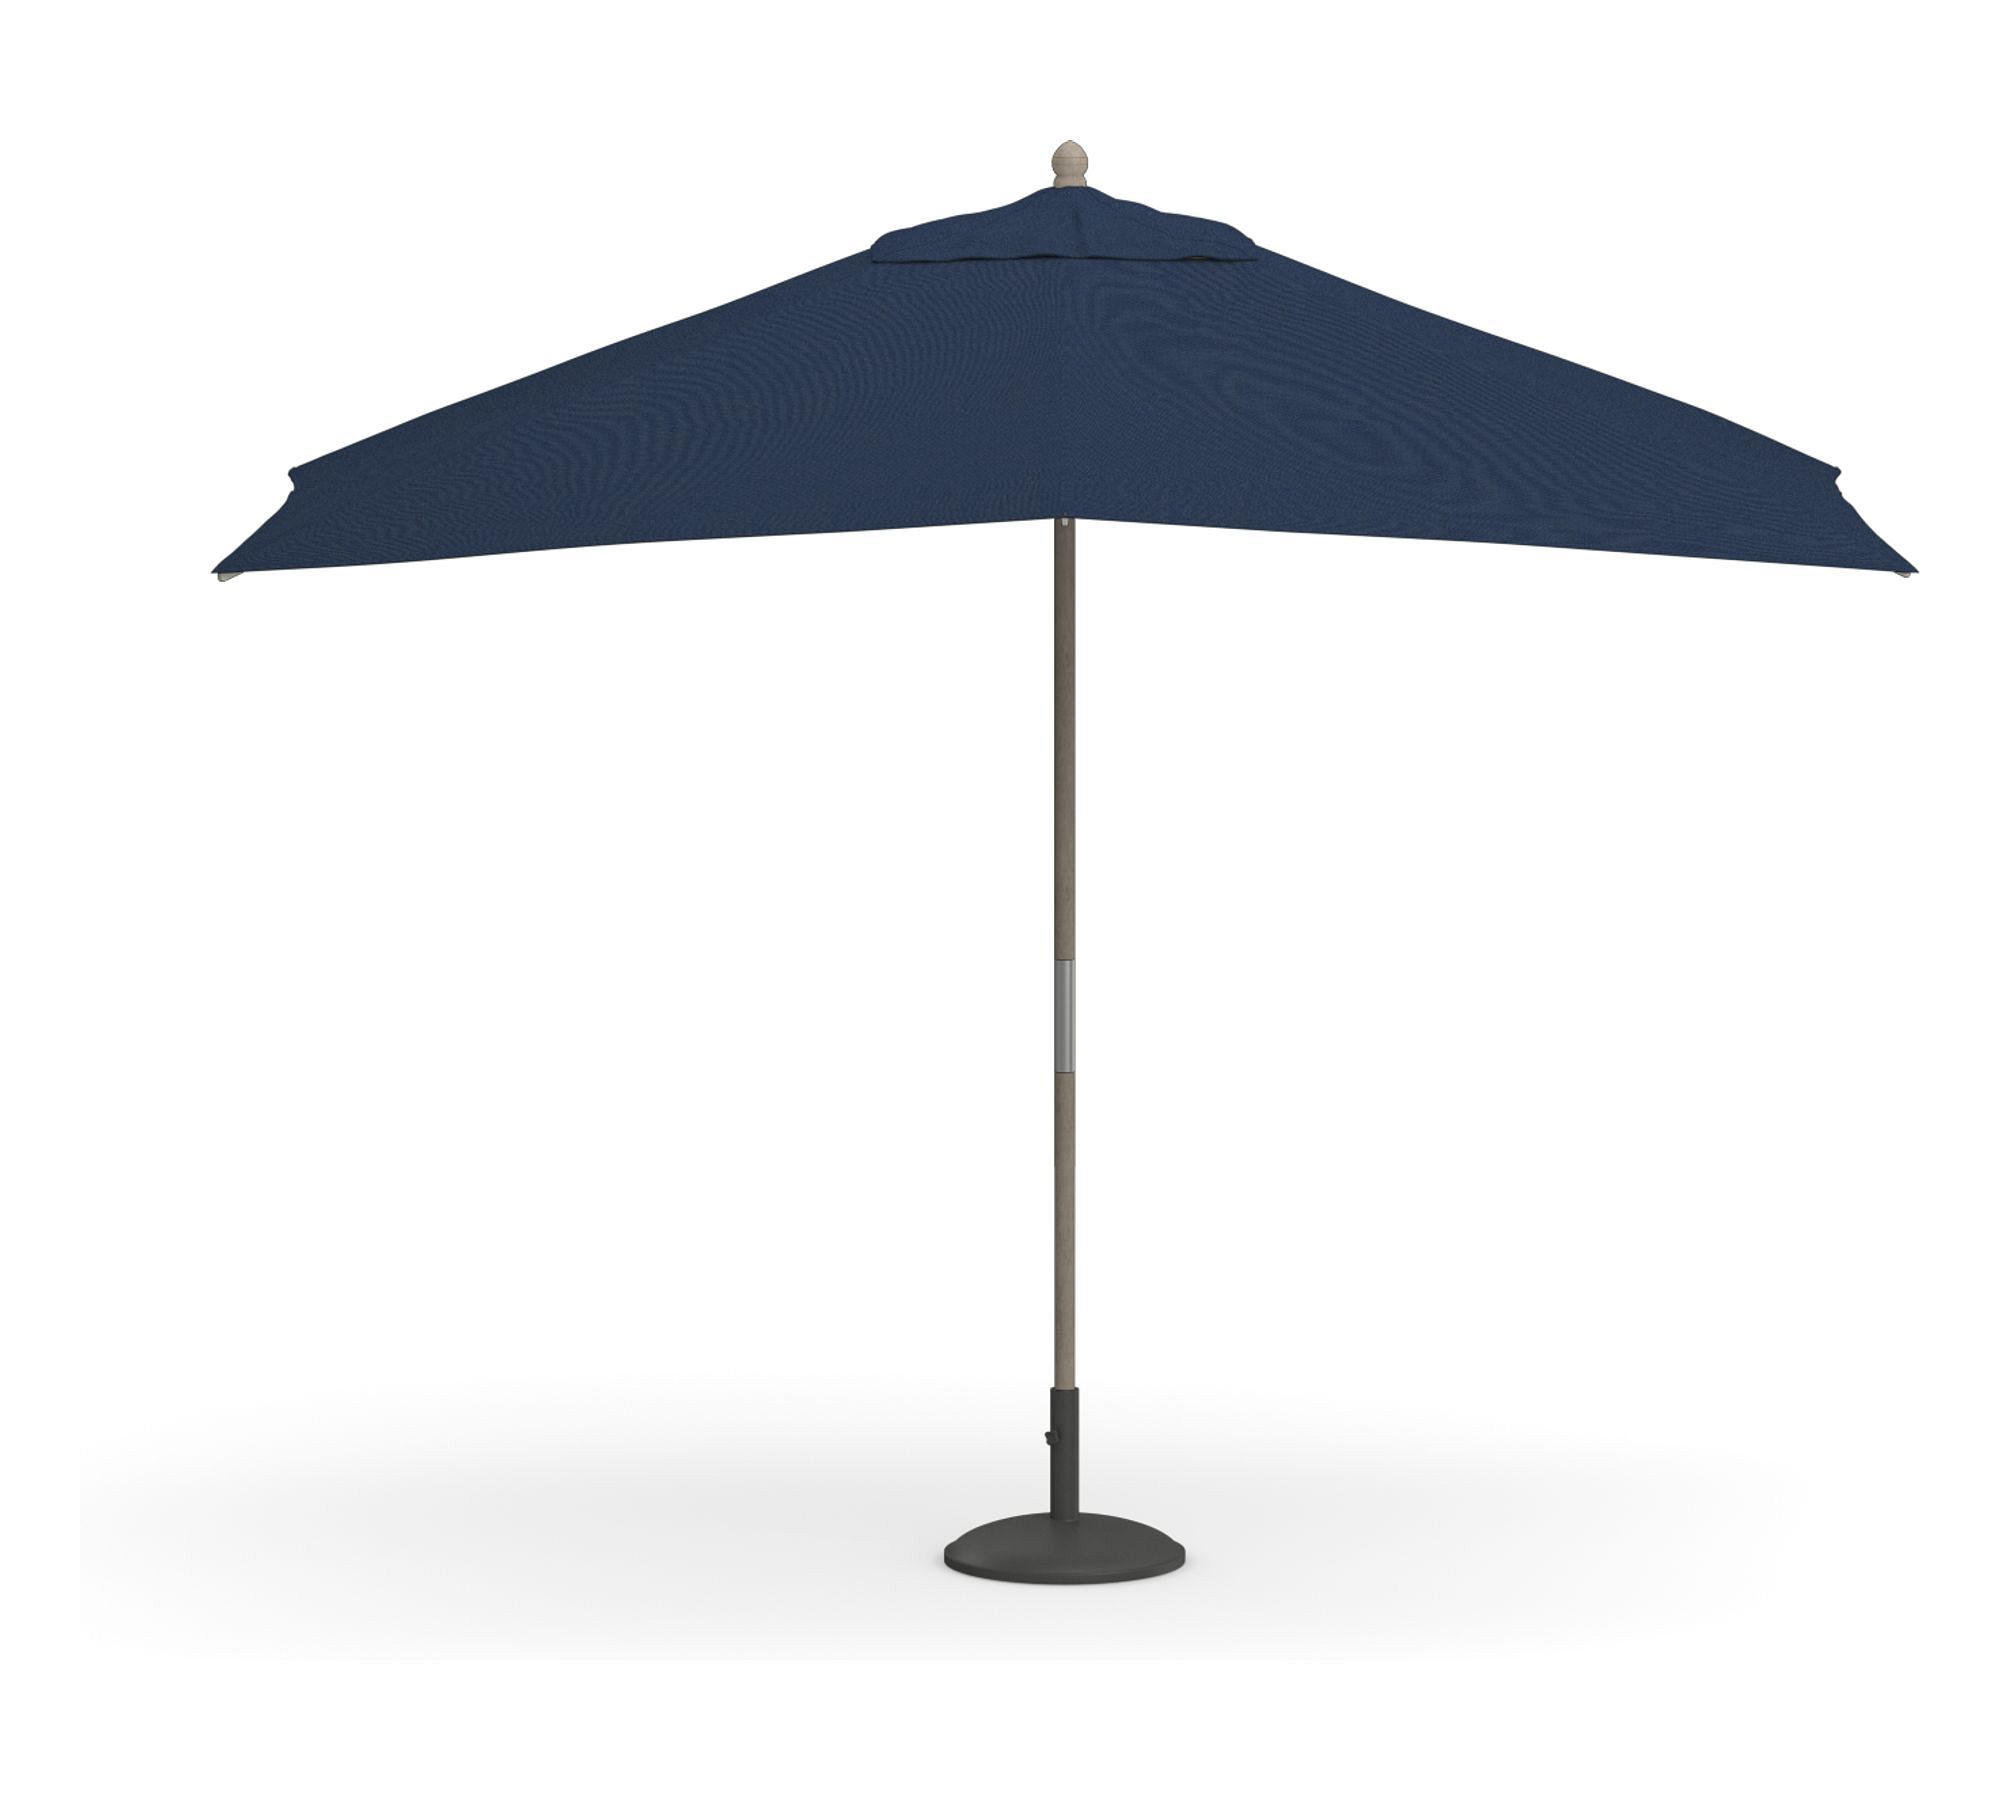 10' Rectangular Outdoor Umbrella – Eucalyptus Frame​, More Finishes Available